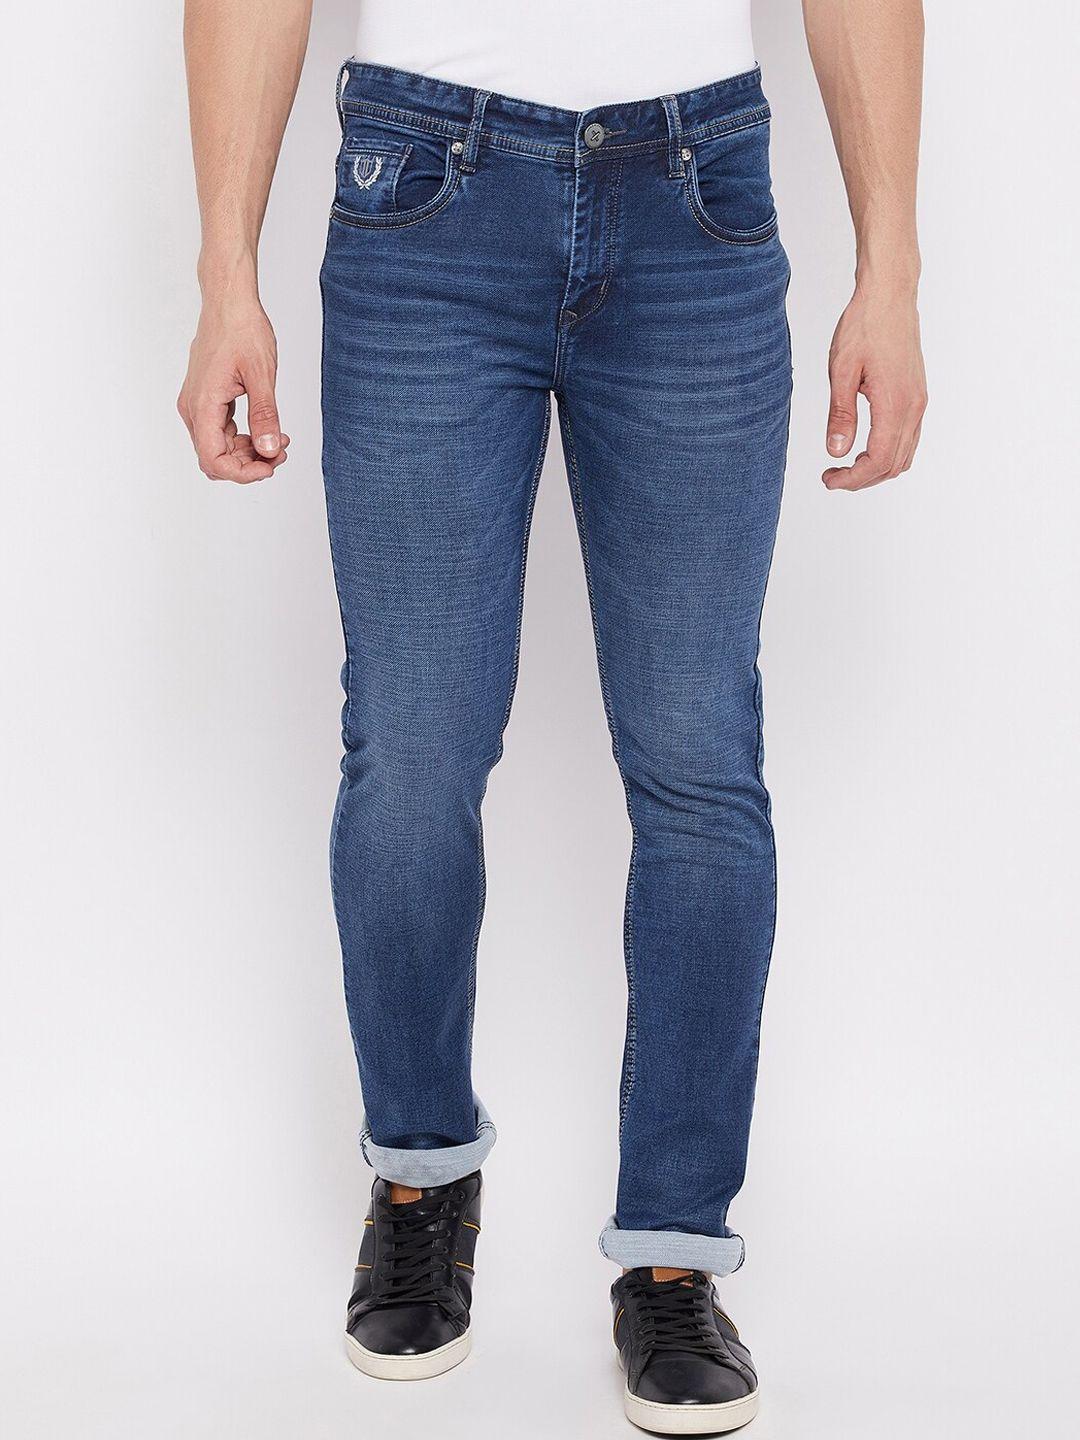 duke-men-blue-slim-fit-light-fade-stretchable-jeans